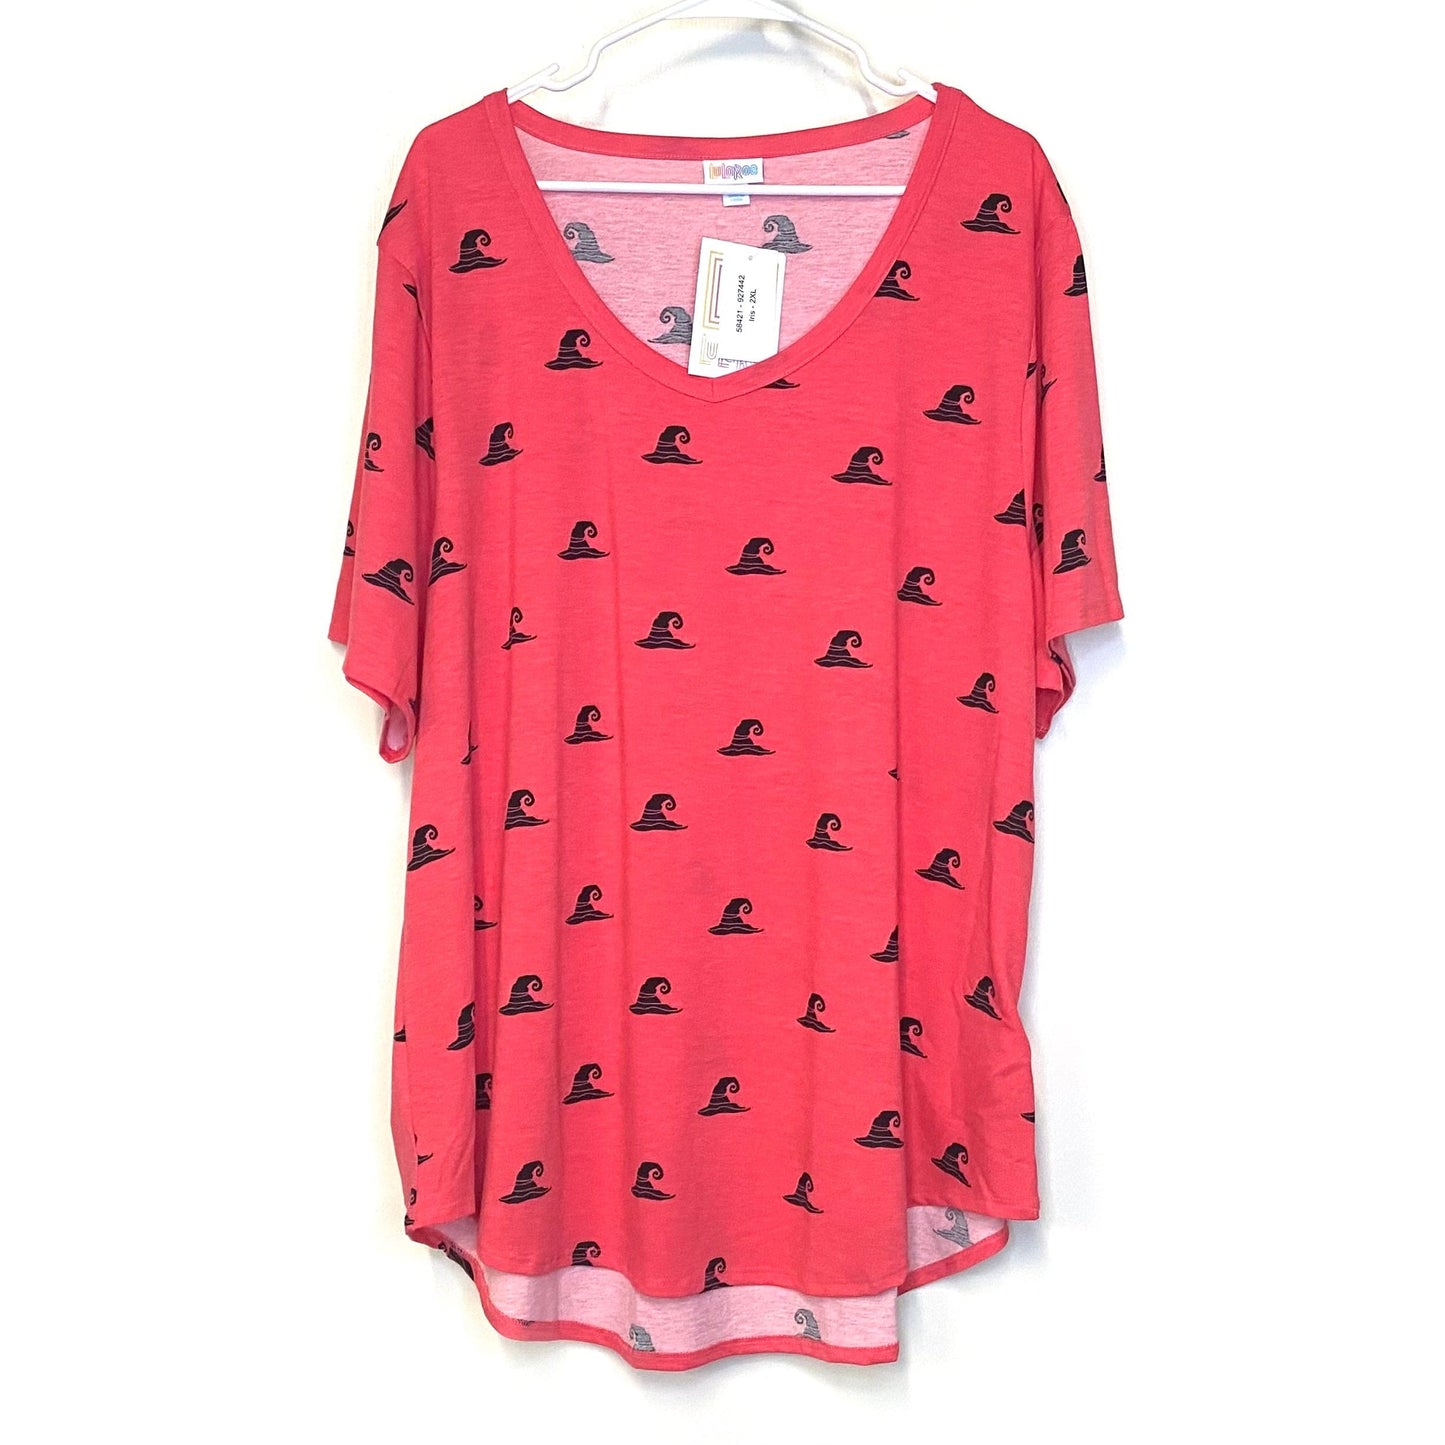 LuLaRoe Womens Size 2XL Witch's Hat Pink/Black Iris Graphic T-Shirt Shirt S/s NWT